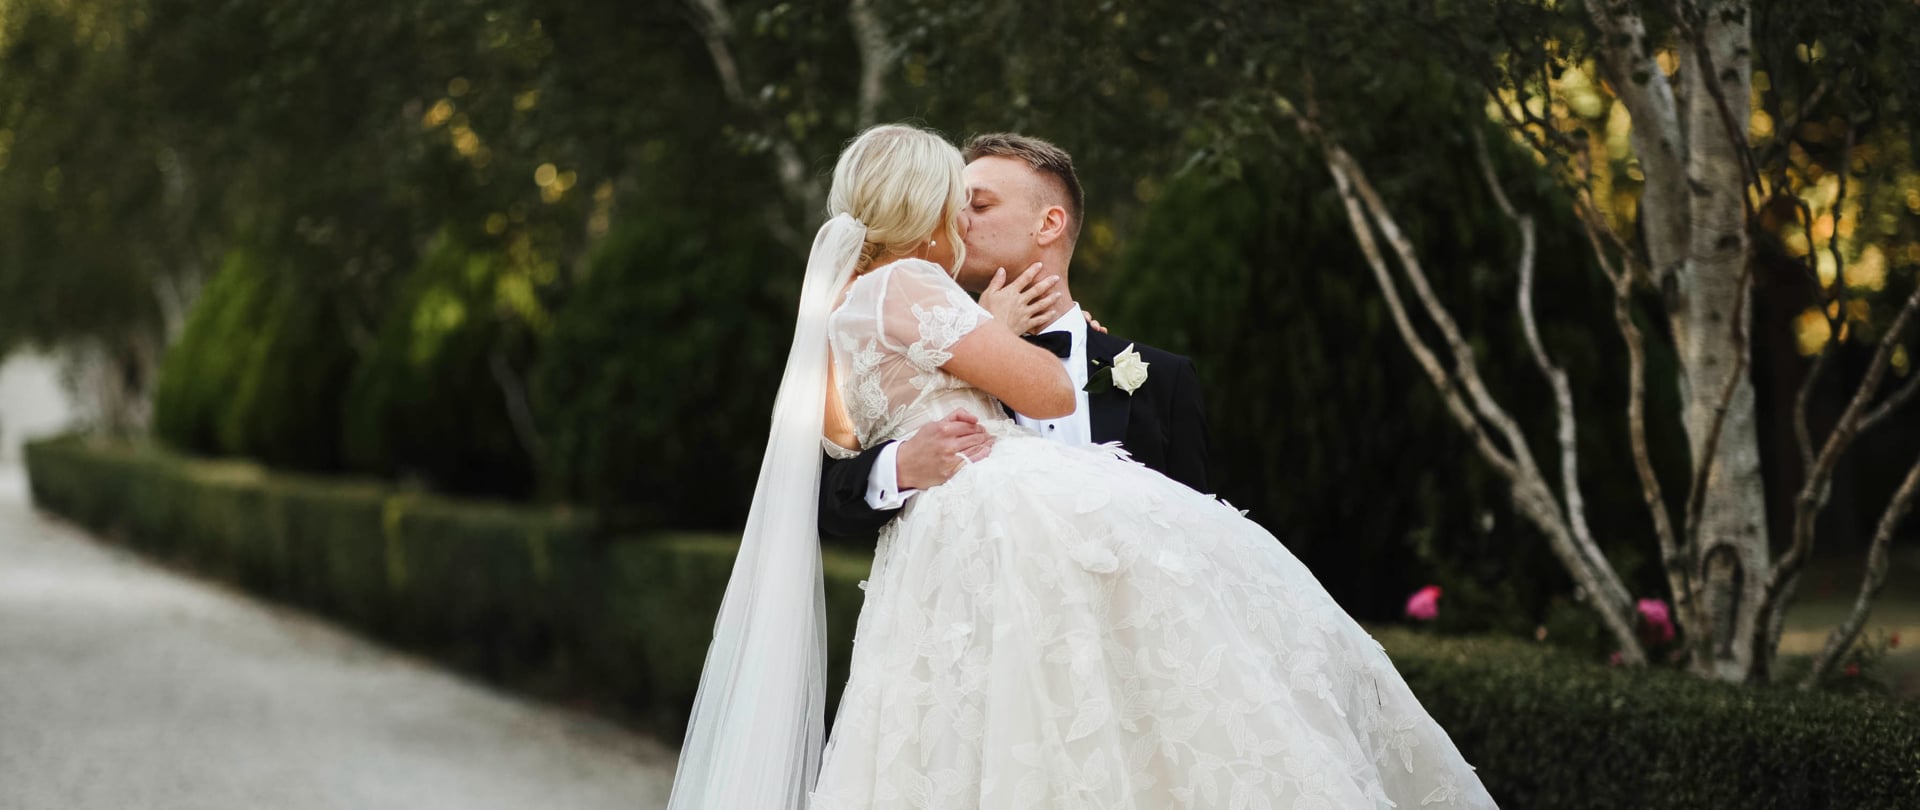 Courtney & Callum Wedding Video Filmed at Victoria, Australia